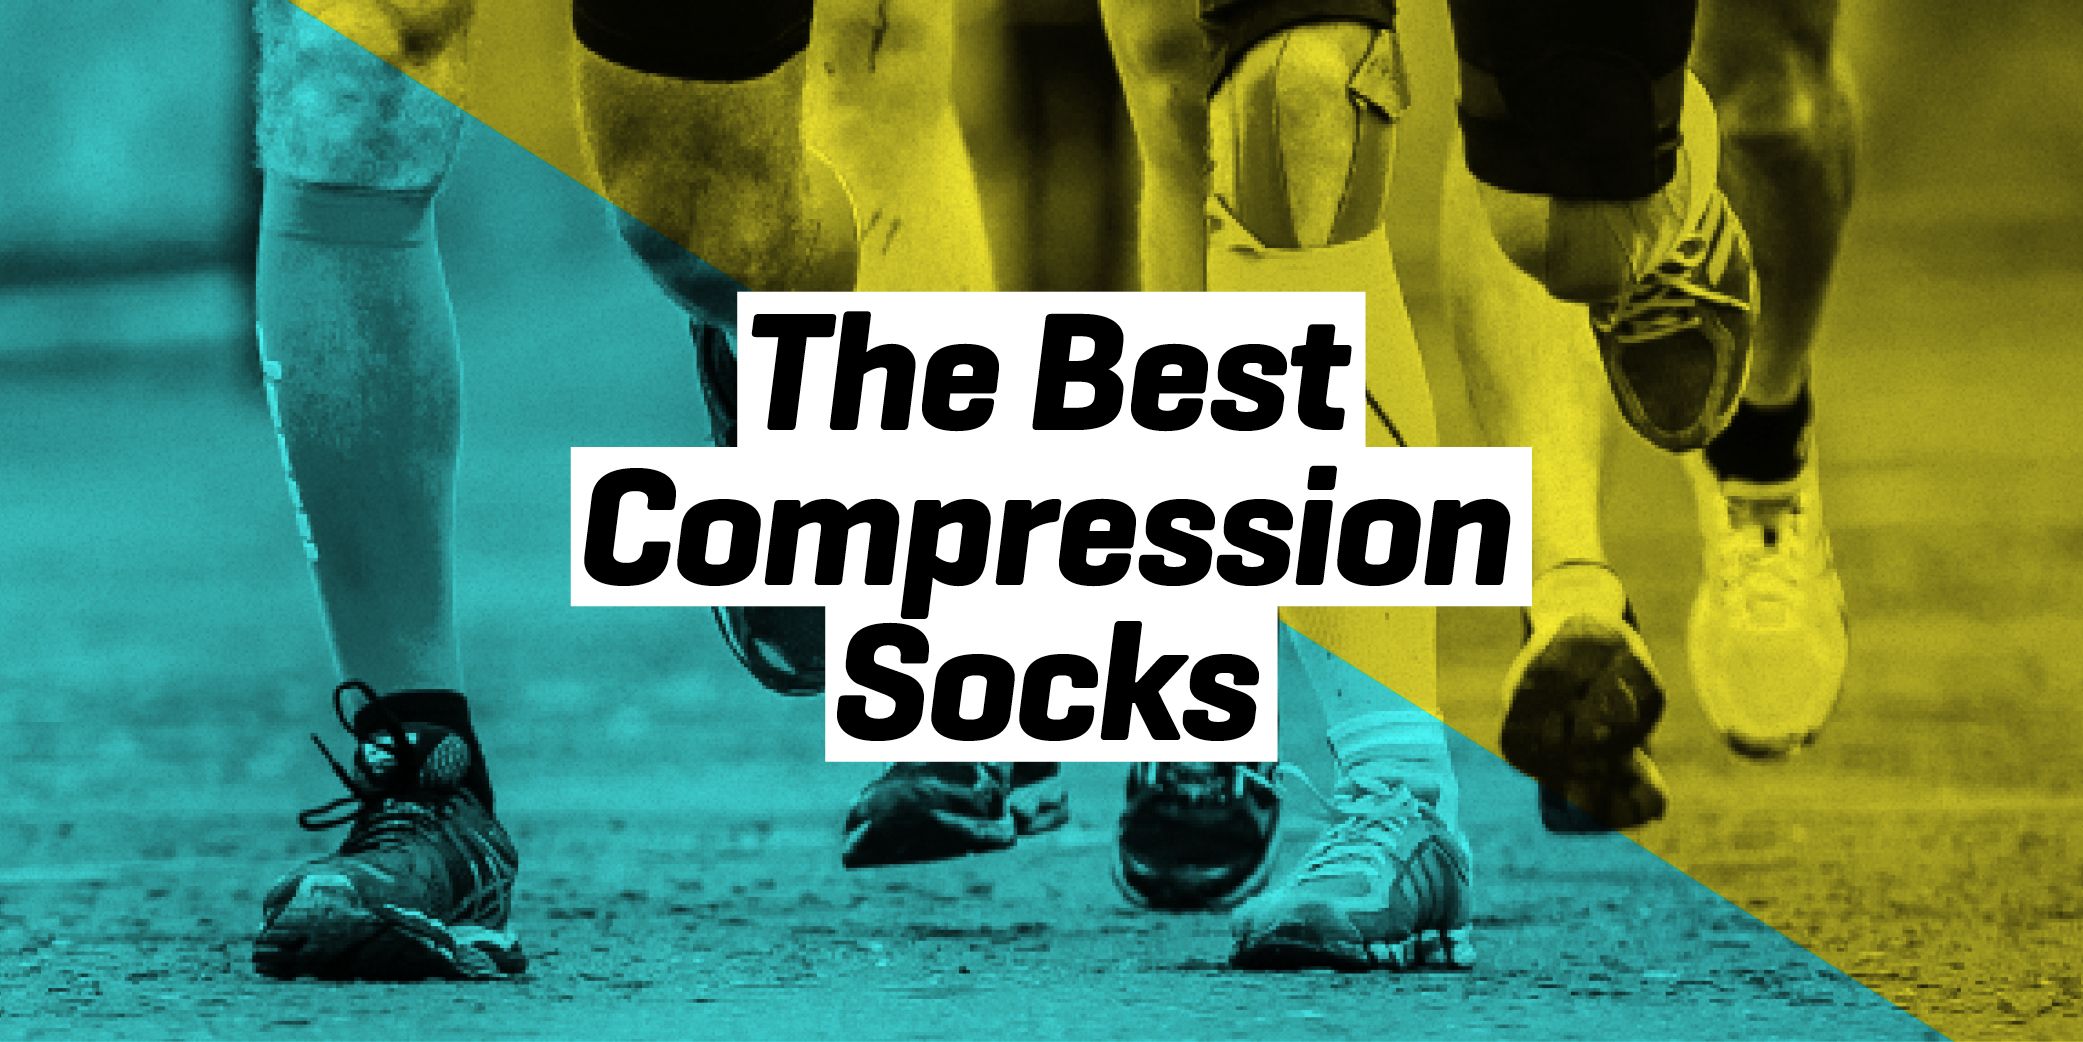 calves pain relief compression socks compression socks Compression socks leg compression socks with calf thrombosis socks compression sleeve for shin splints running socks unisex 